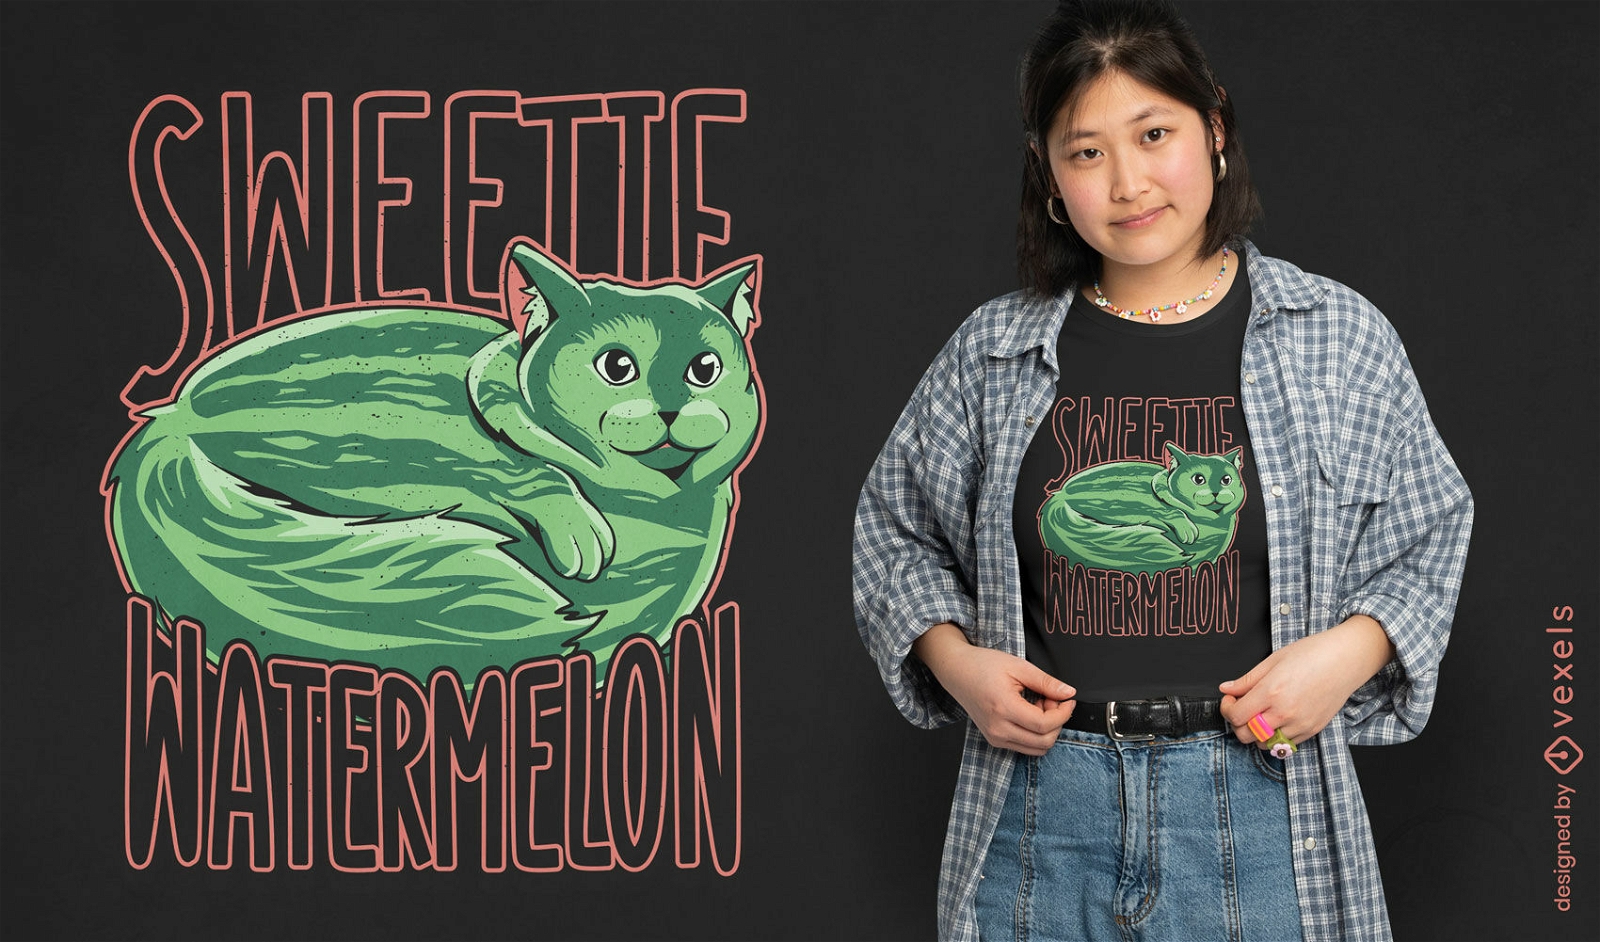 Wassermelonenkatzen-Tier-T-Shirt-Design